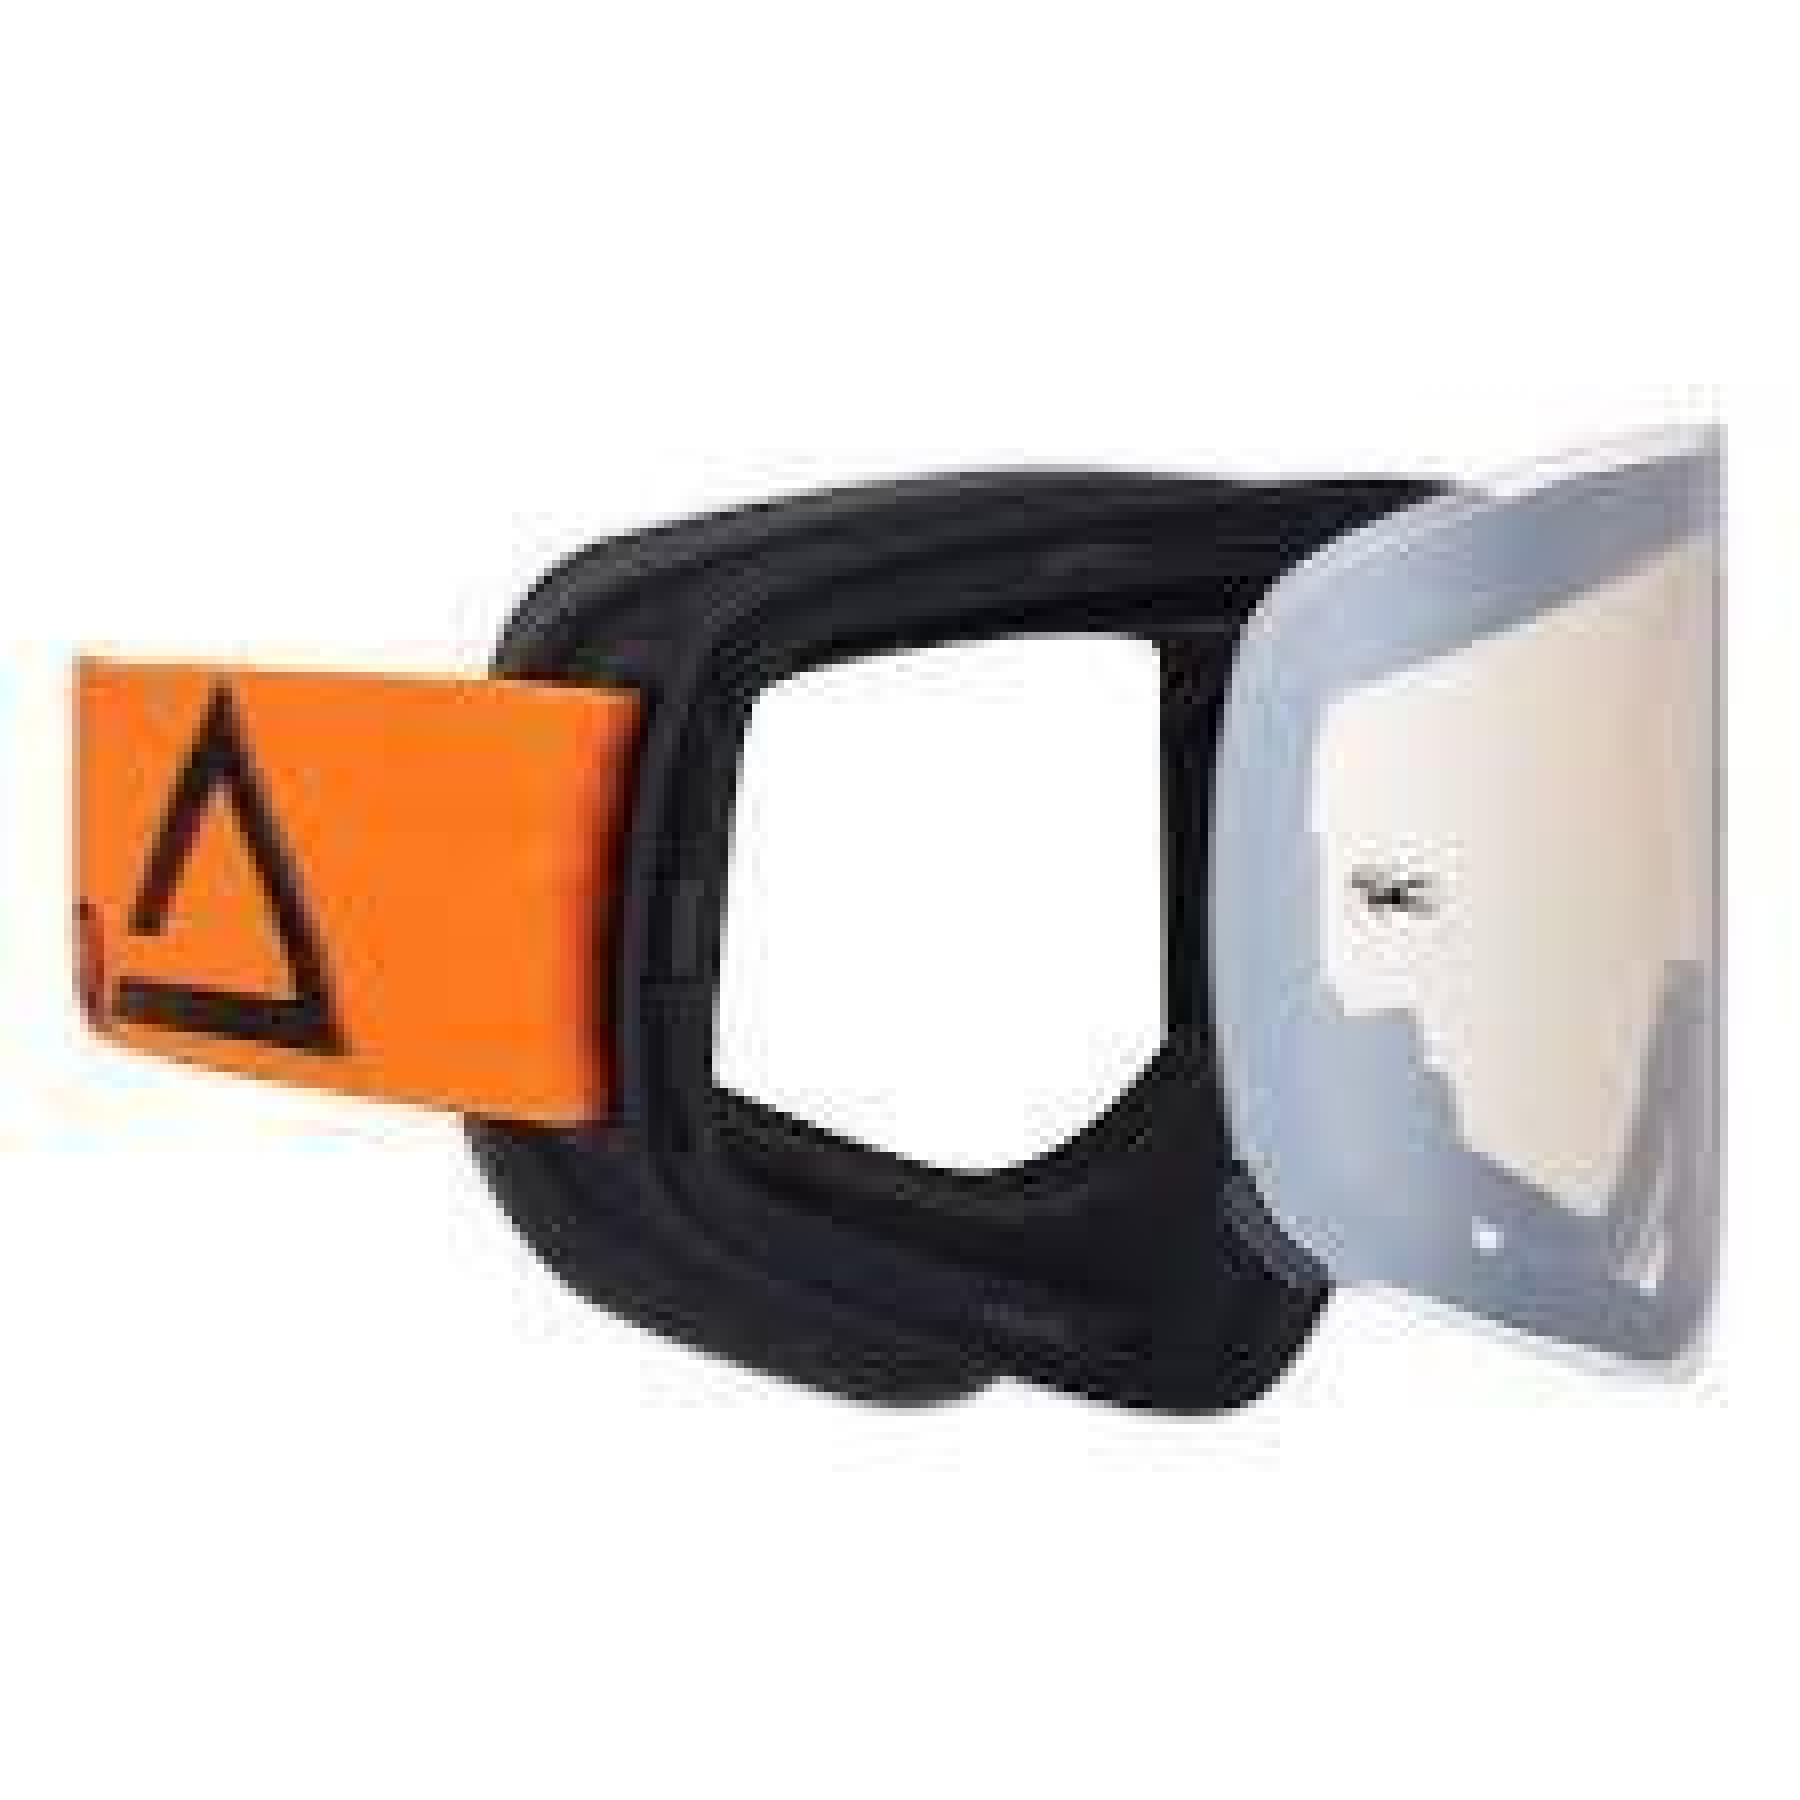 Gafas de moto  polarizadas Amoq Vision Magnetic